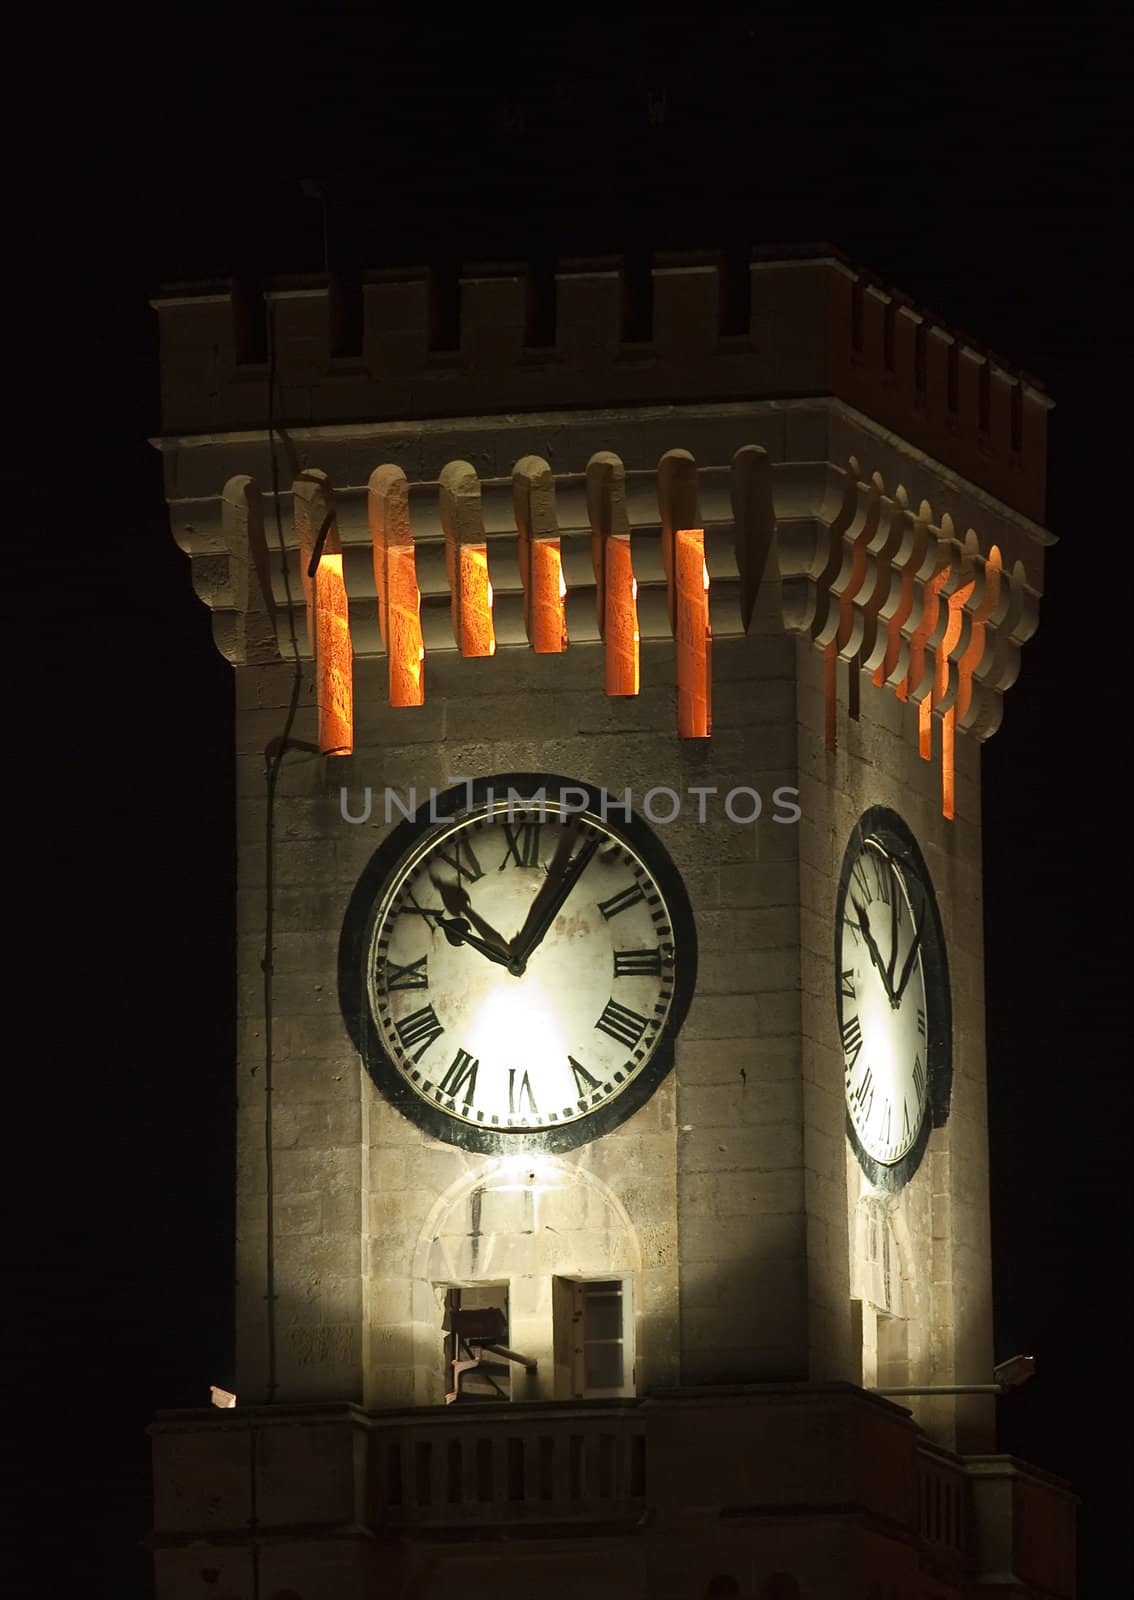 The Mtarfa Clocktower in Malta here shot during the night